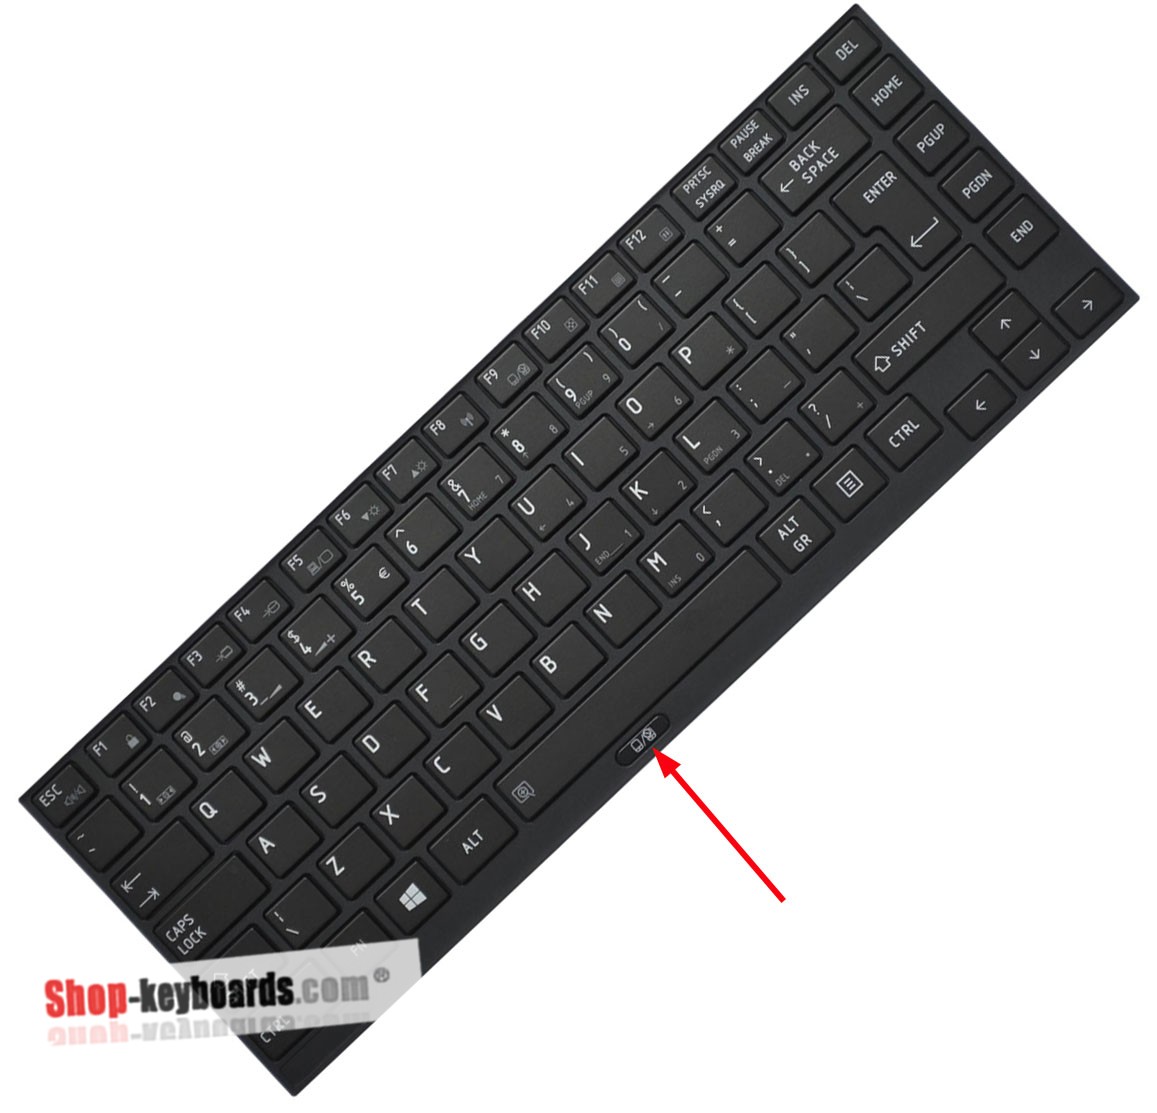 Toshiba Portege R700-173  Keyboard replacement